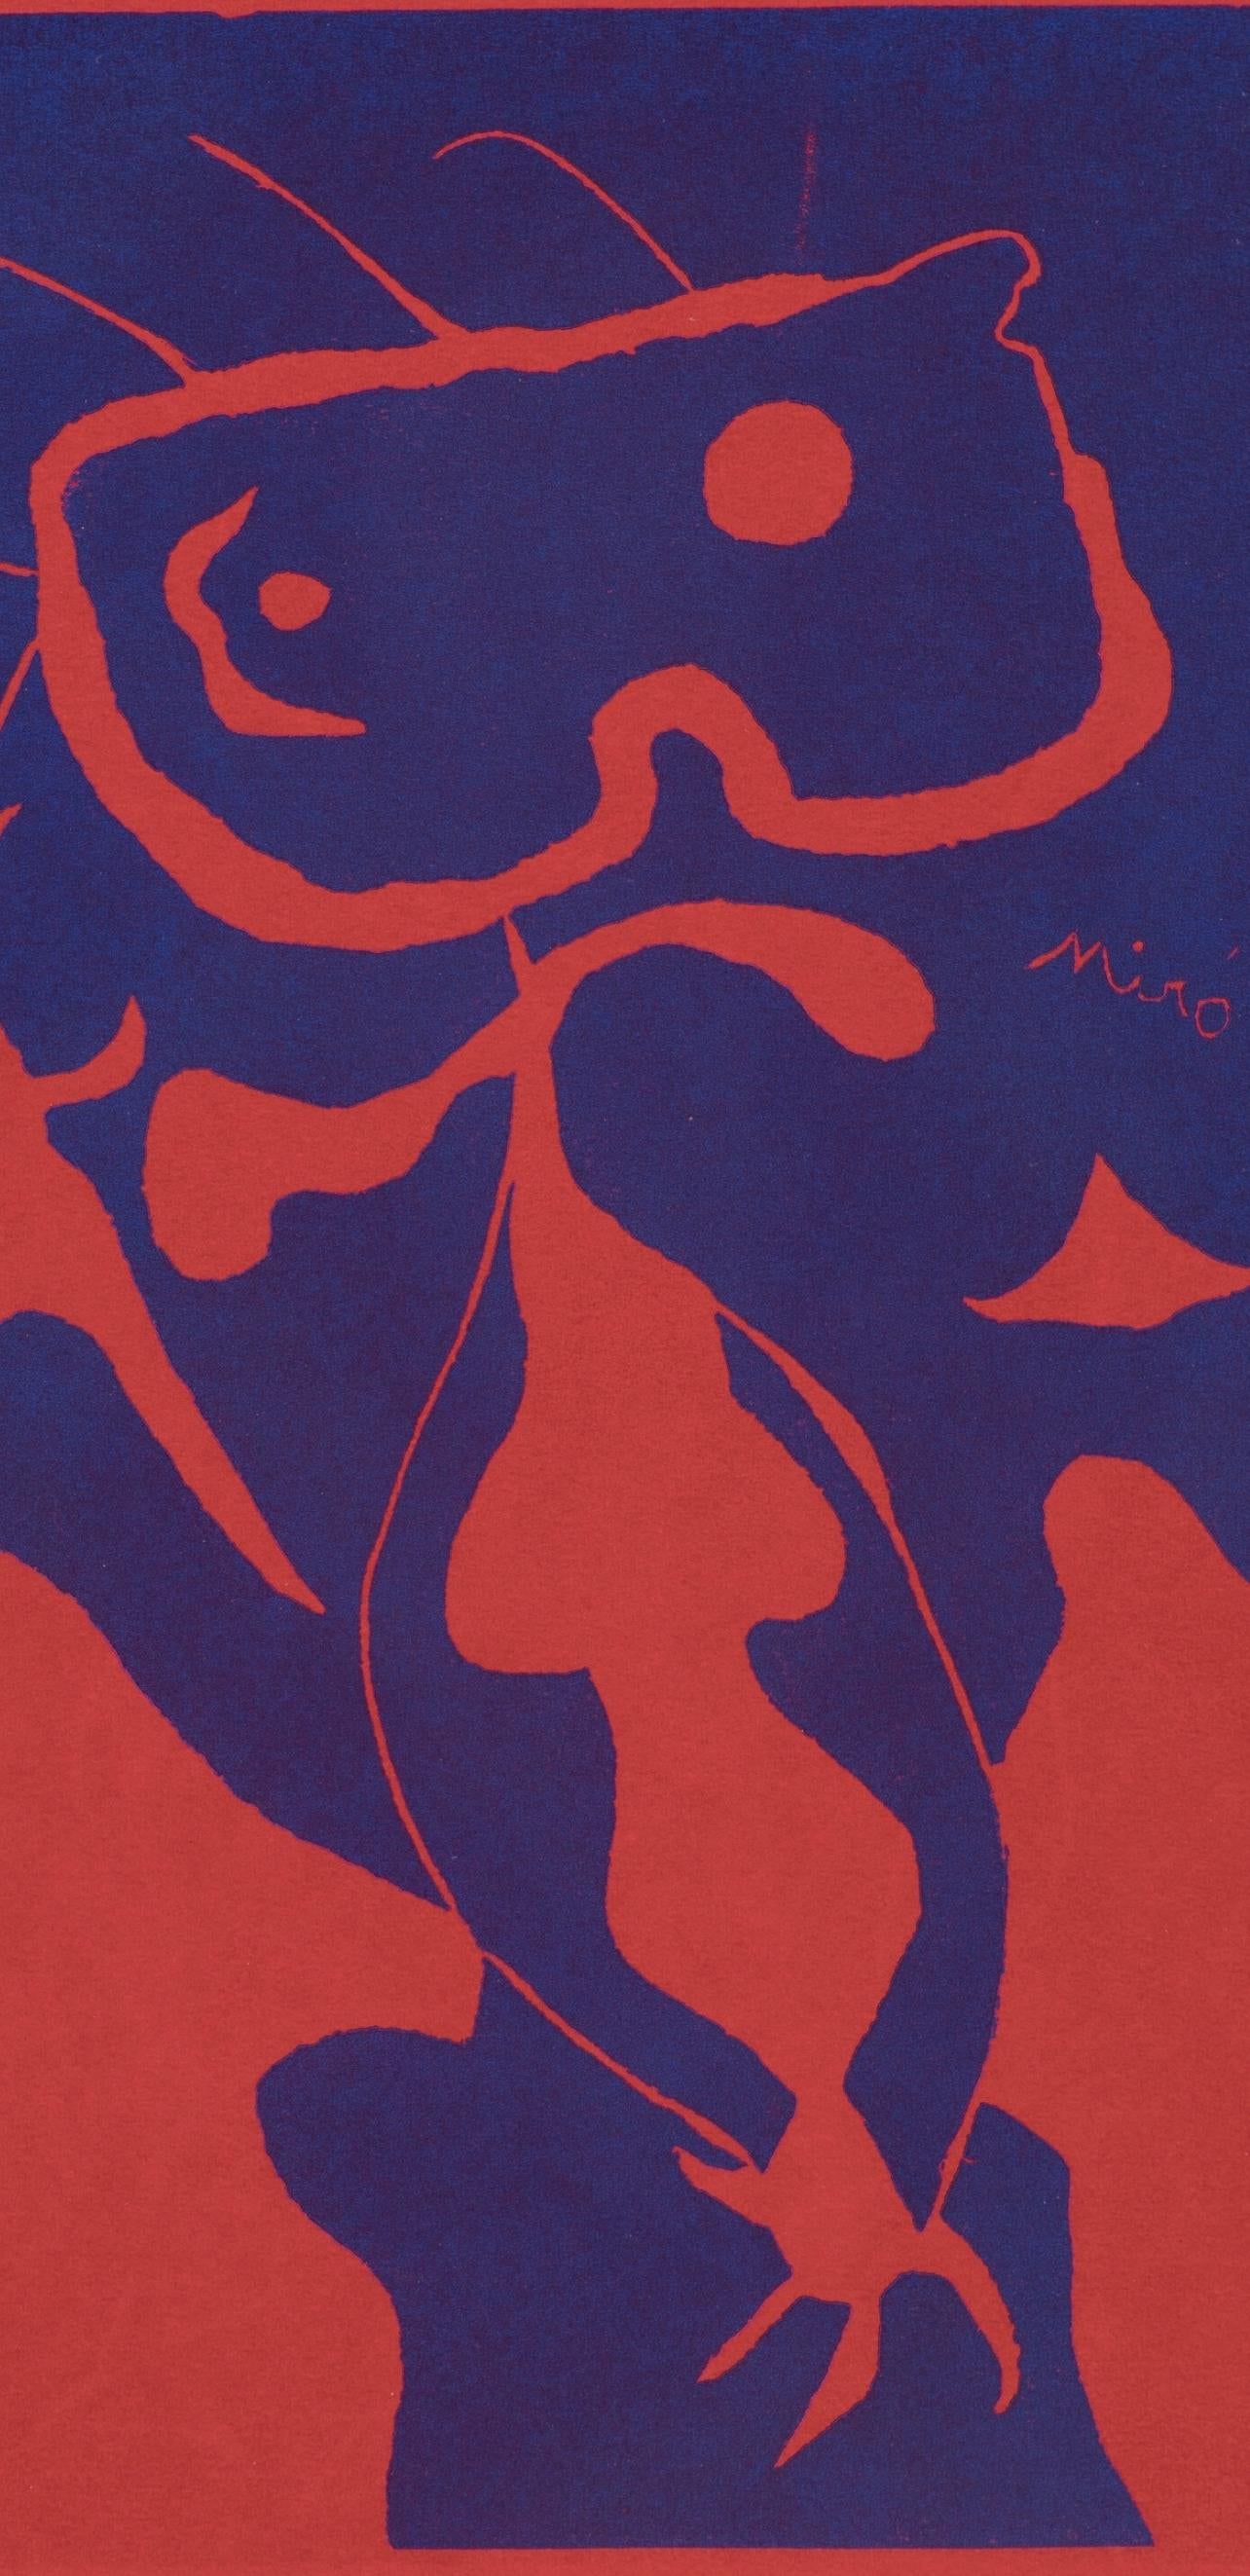 Miro, Komposition (Dupin 40), XXe Siècle (nach) (Surrealismus), Print, von Joan Miró